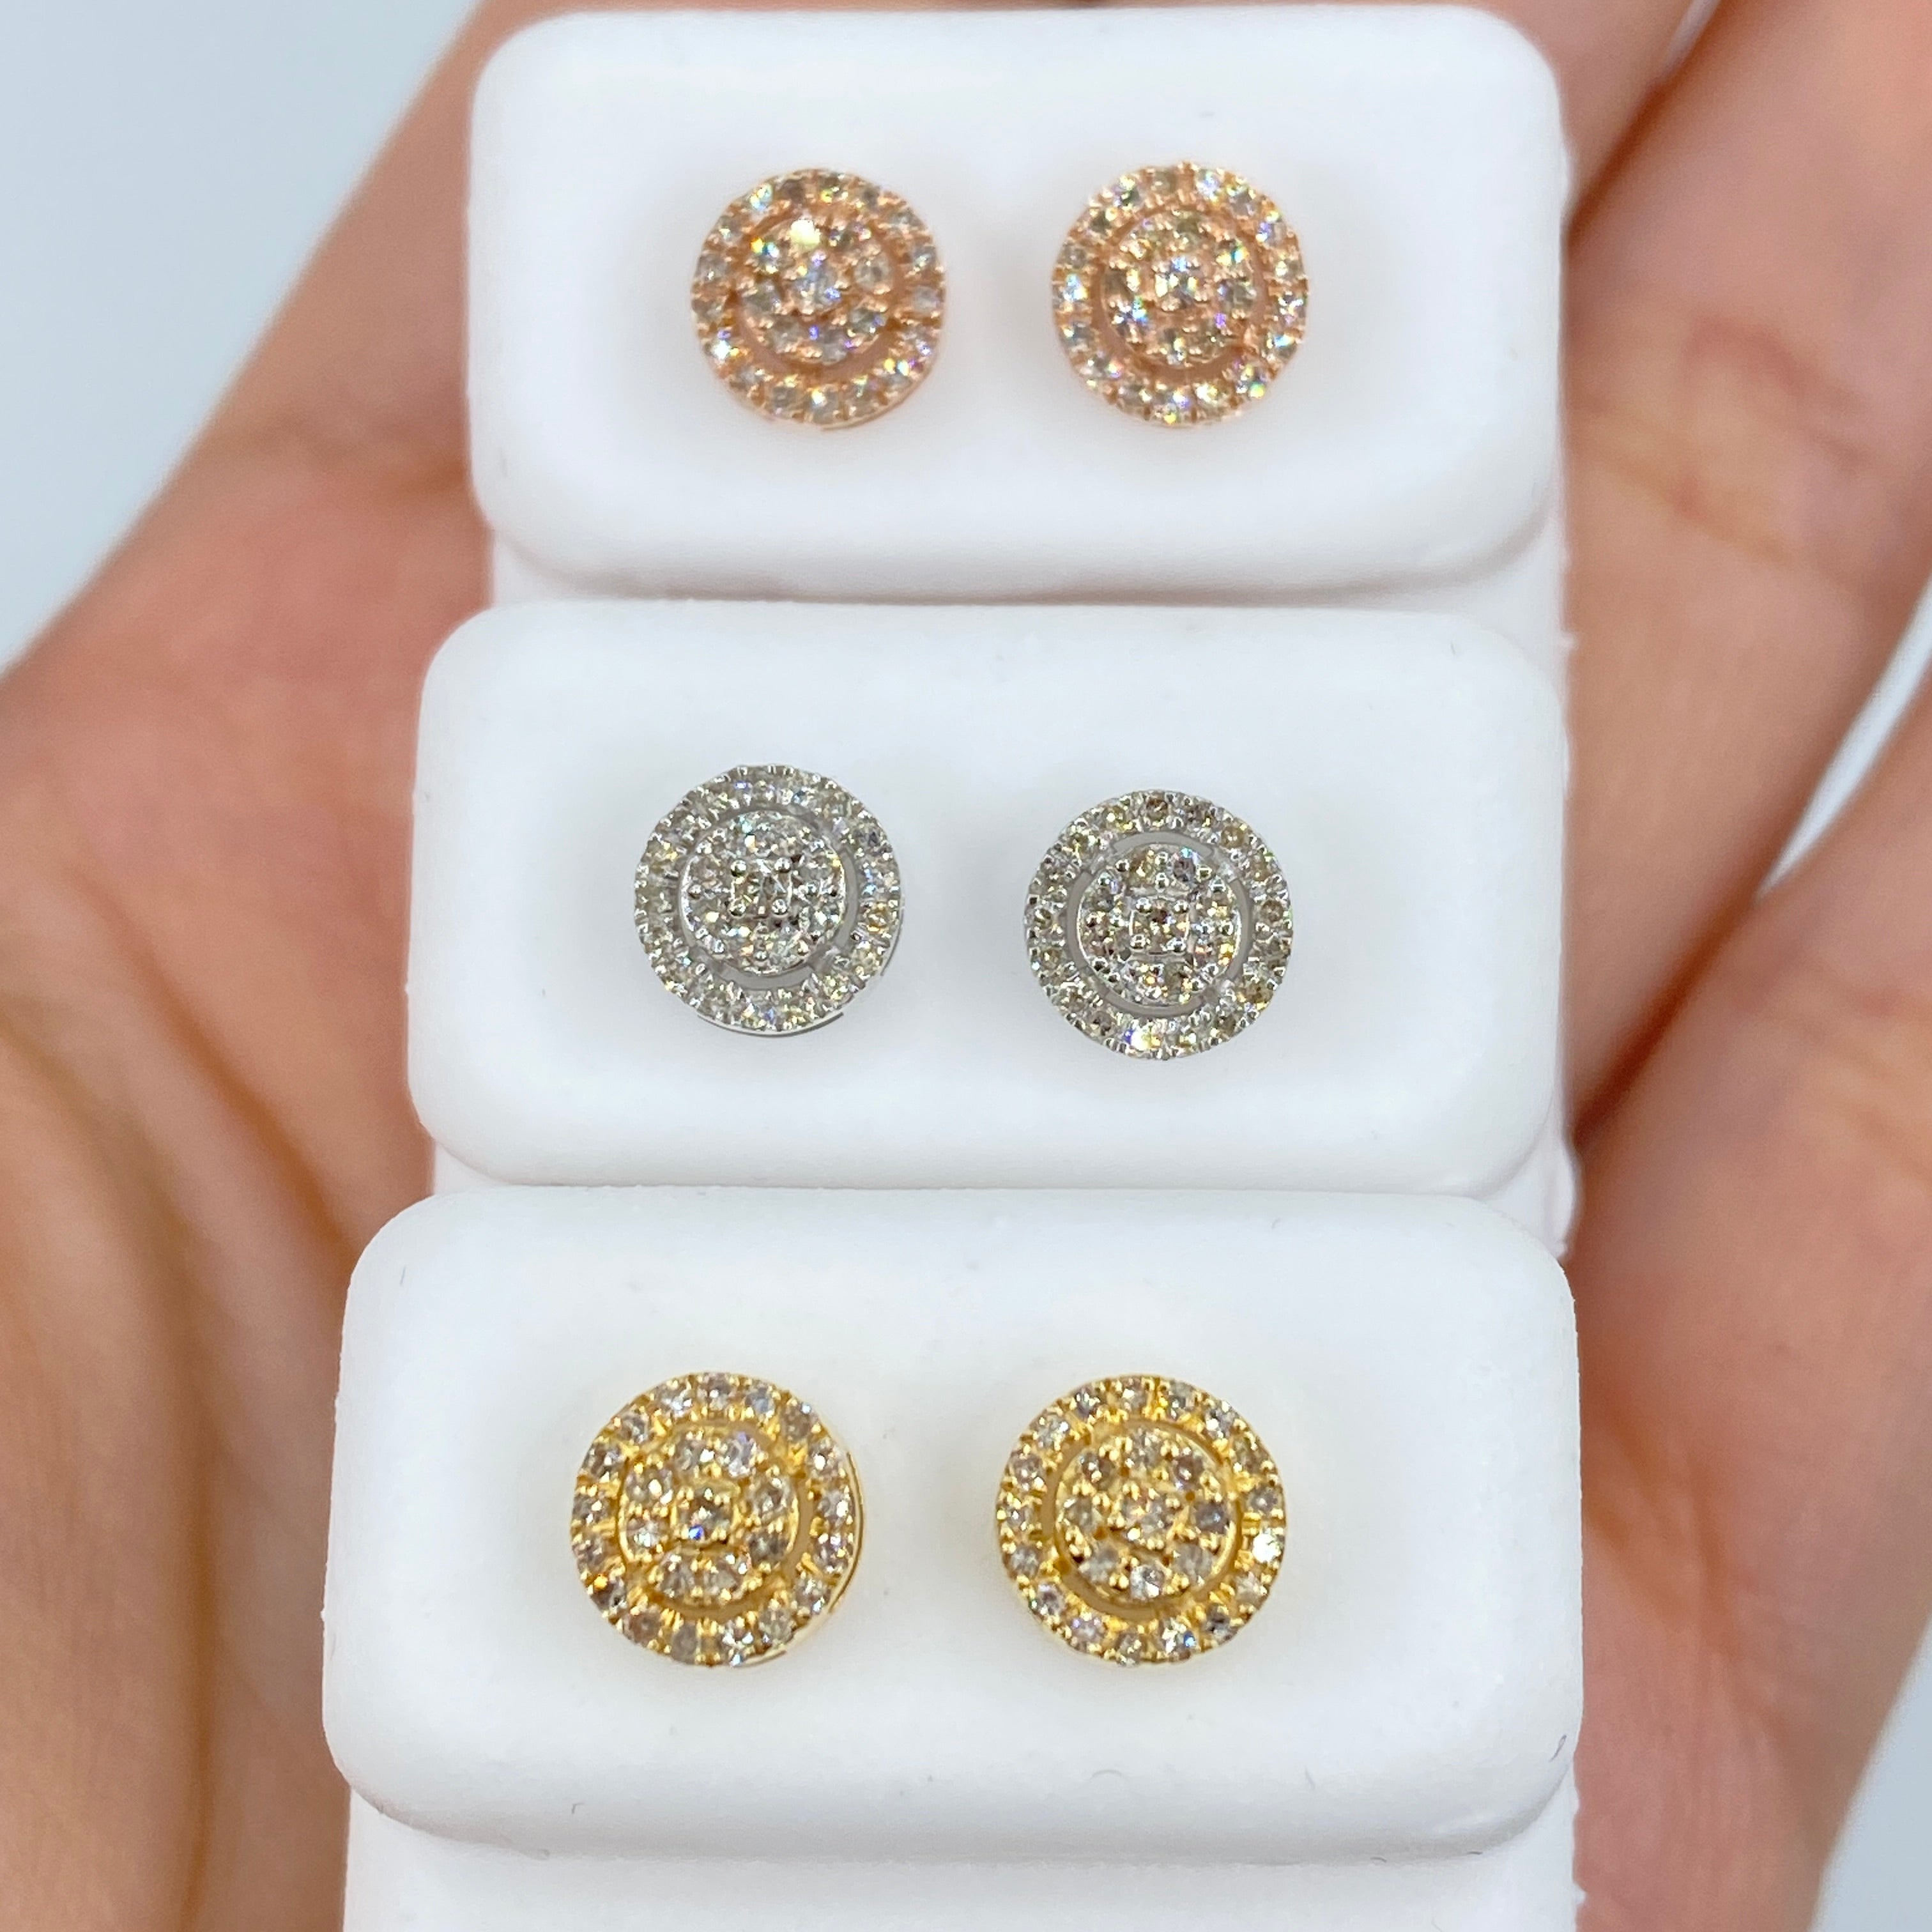 14K Diamond Key Pendant — Designs By S&R